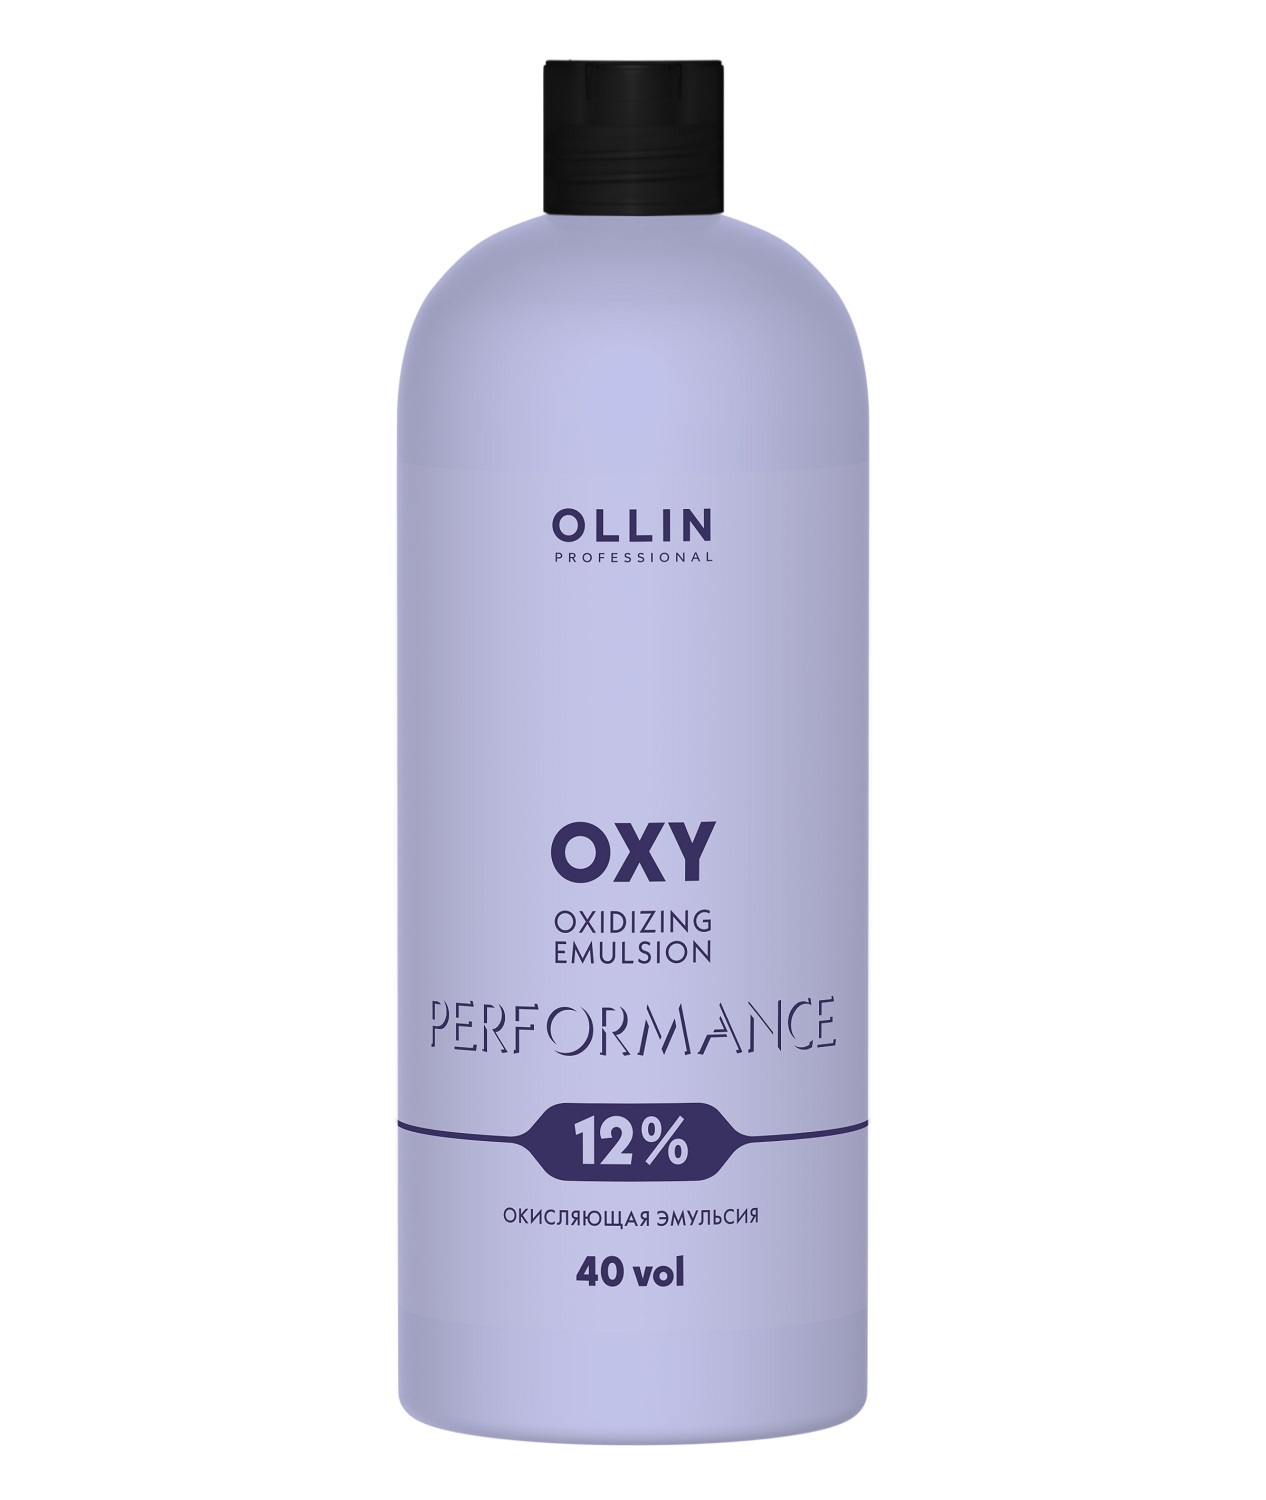 Ollin Professional Окисляющая эмульсия 12% 40 vol, 1000 мл (Ollin Professional, Performance)